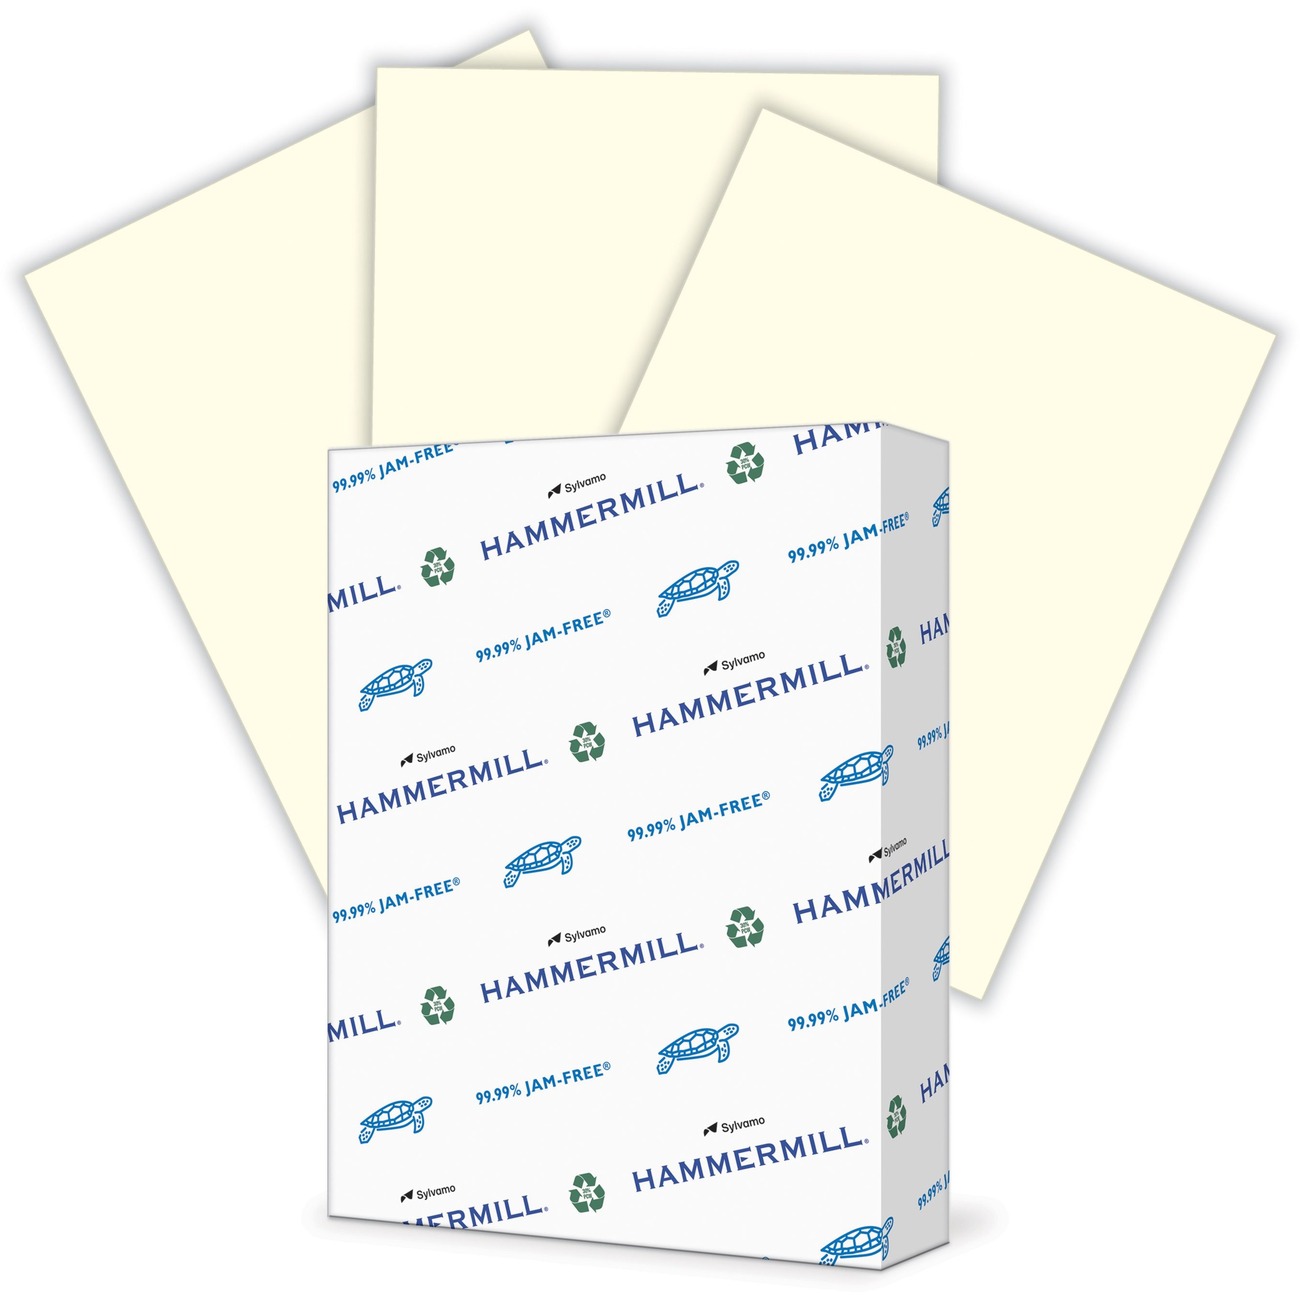 Xerox Vitality Pastel Multipurpose Paper 8 1/2 X 11 Ivory 500